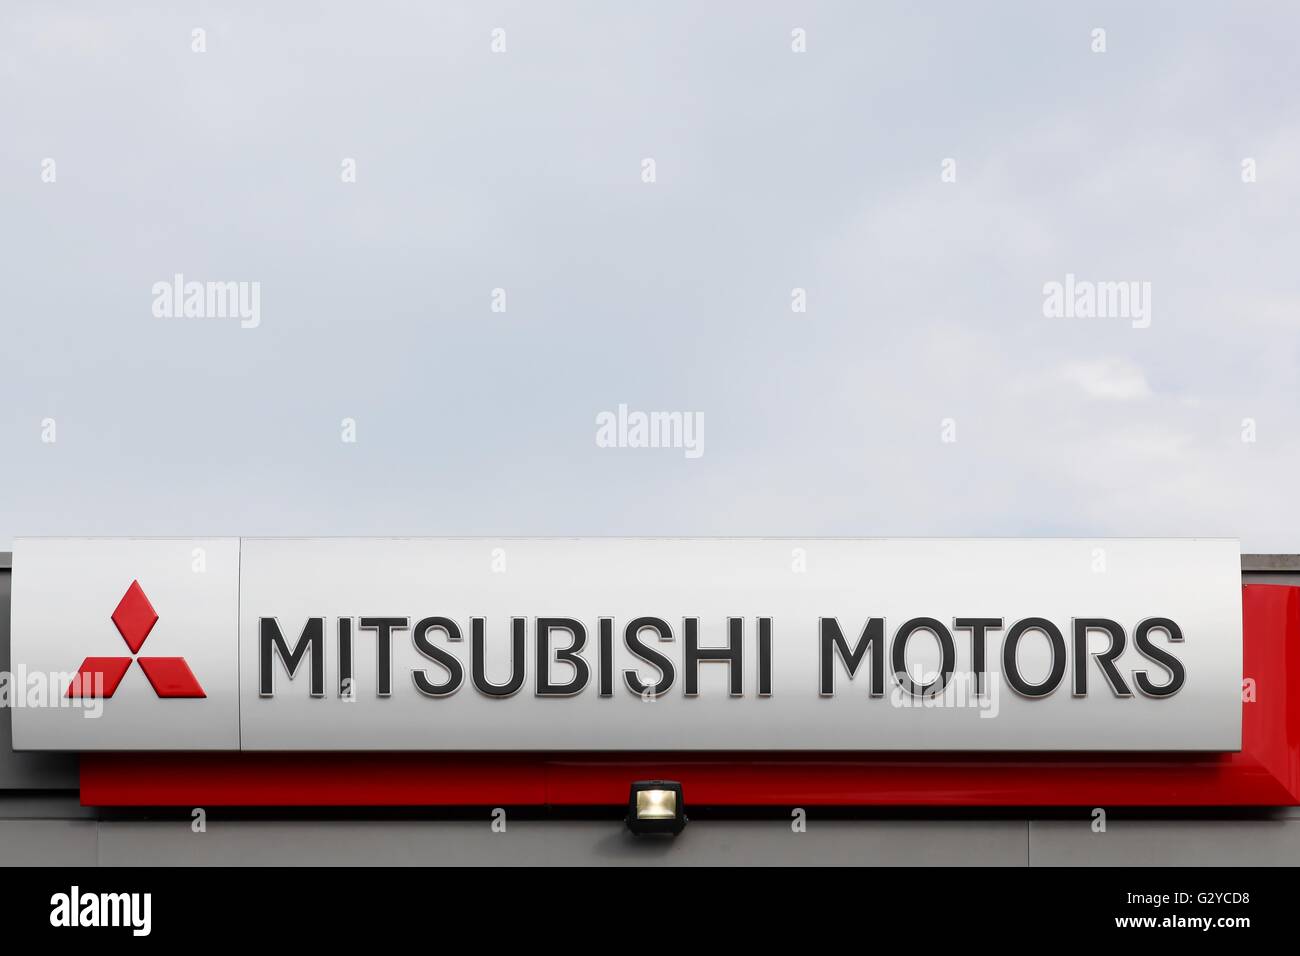 Mitsubishi Motors Corporation sign on a wall Stock Photo